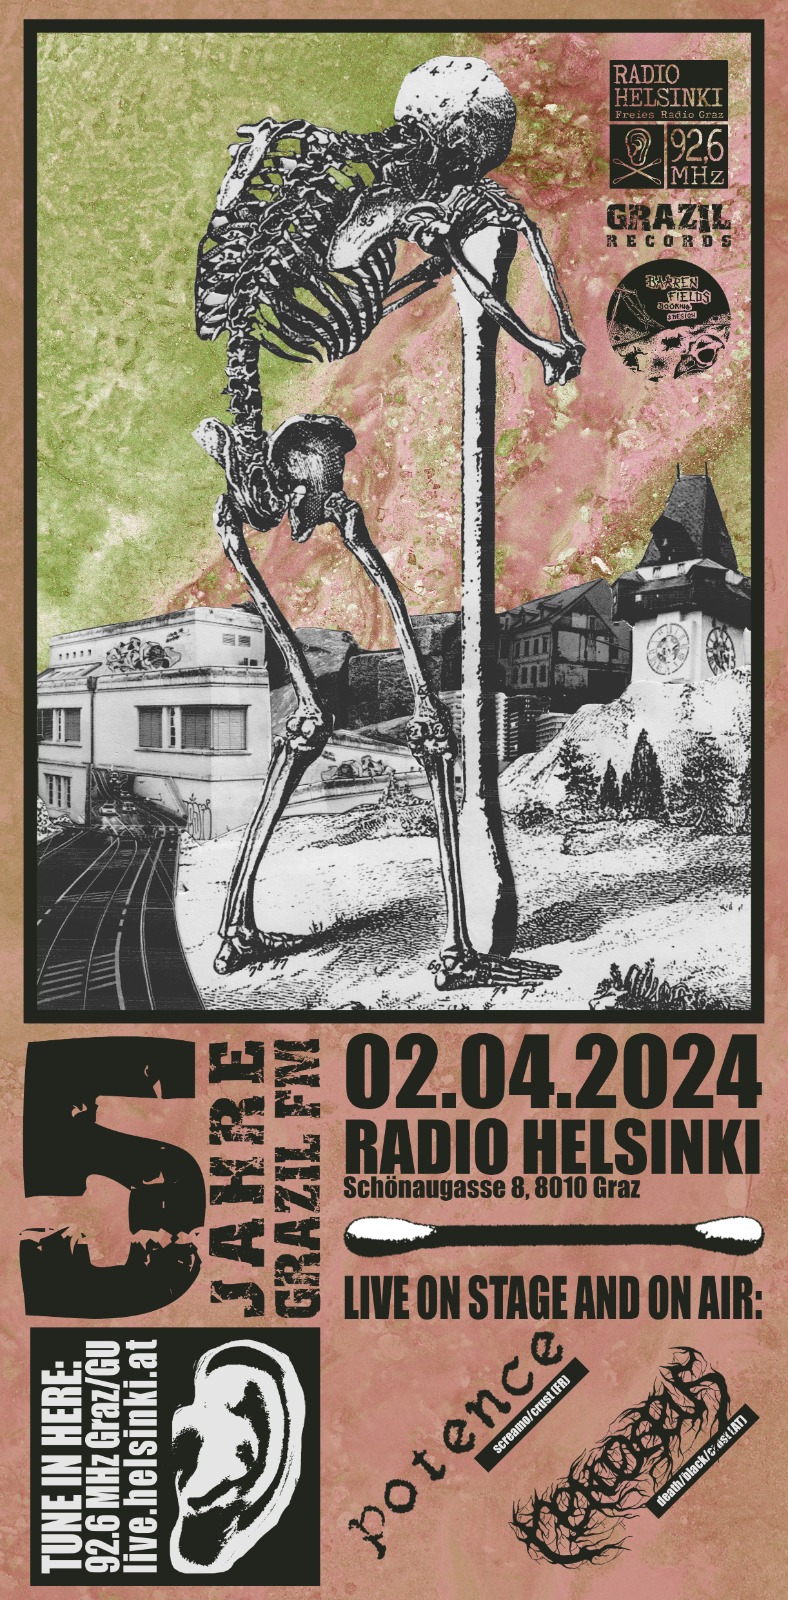 5 Jahre grazil FM Radio Helsinki grazil Records